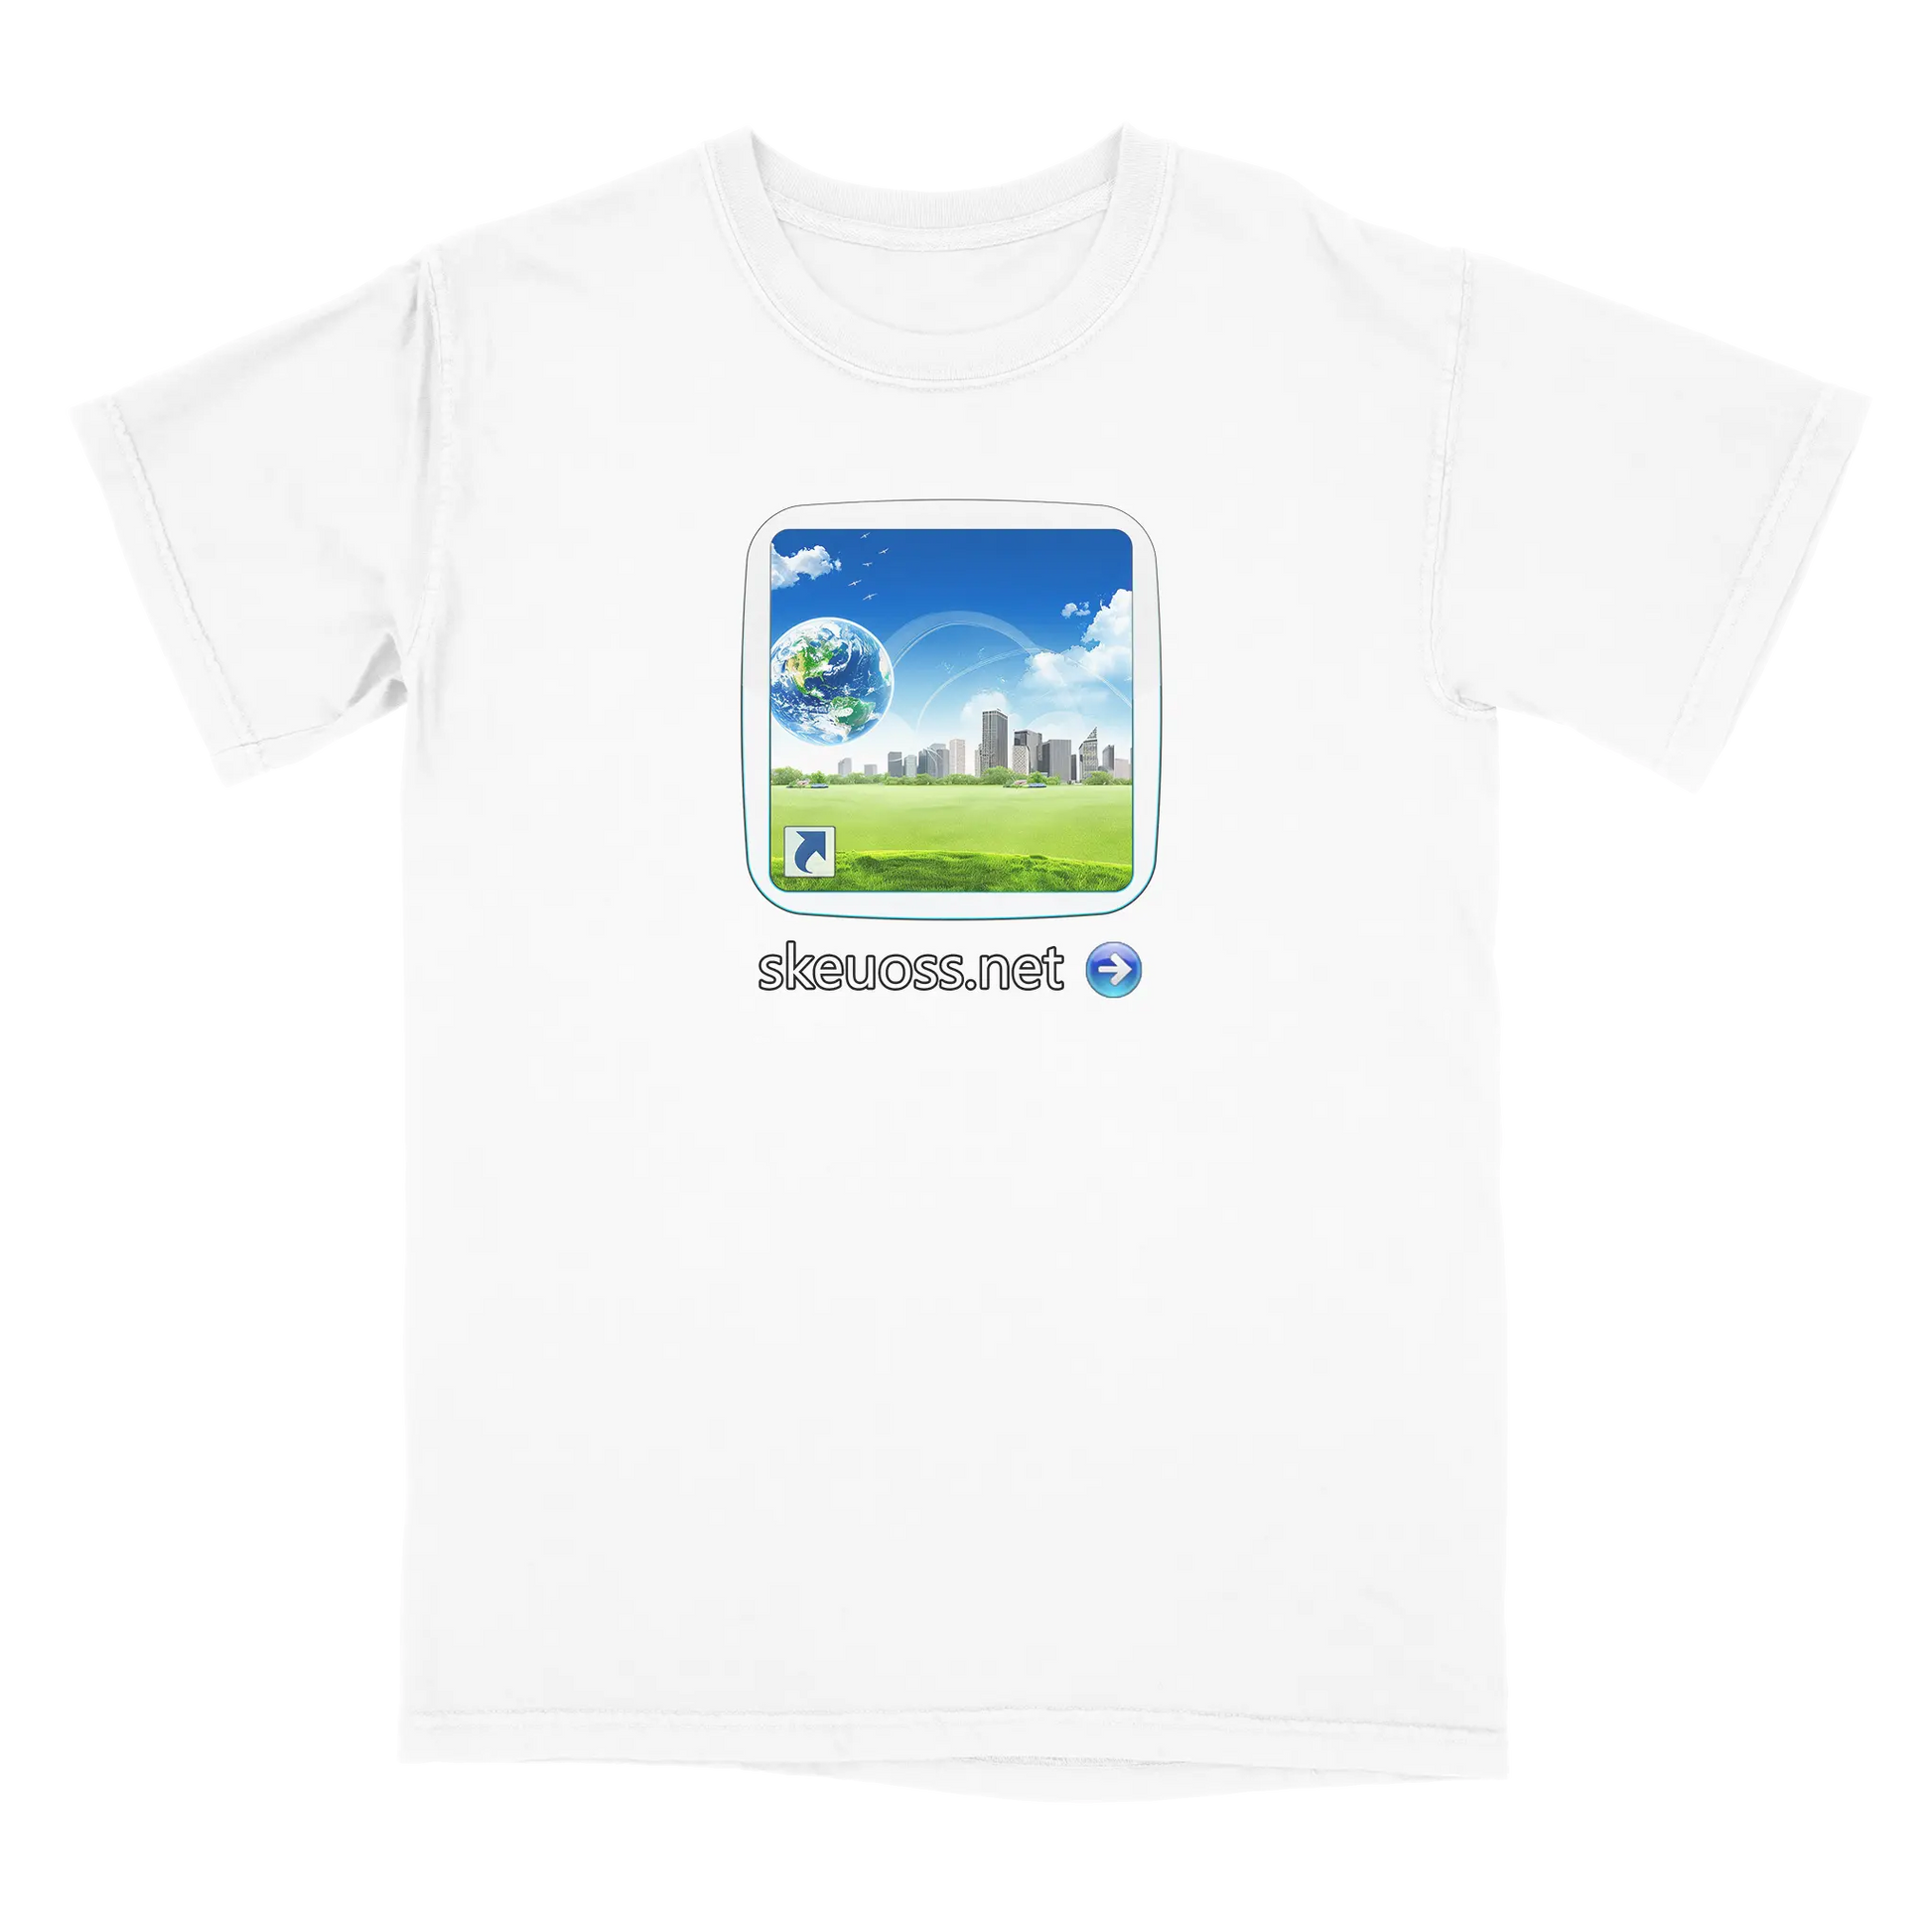 Frutiger Aero T-shirt - User Login Collection - User 378